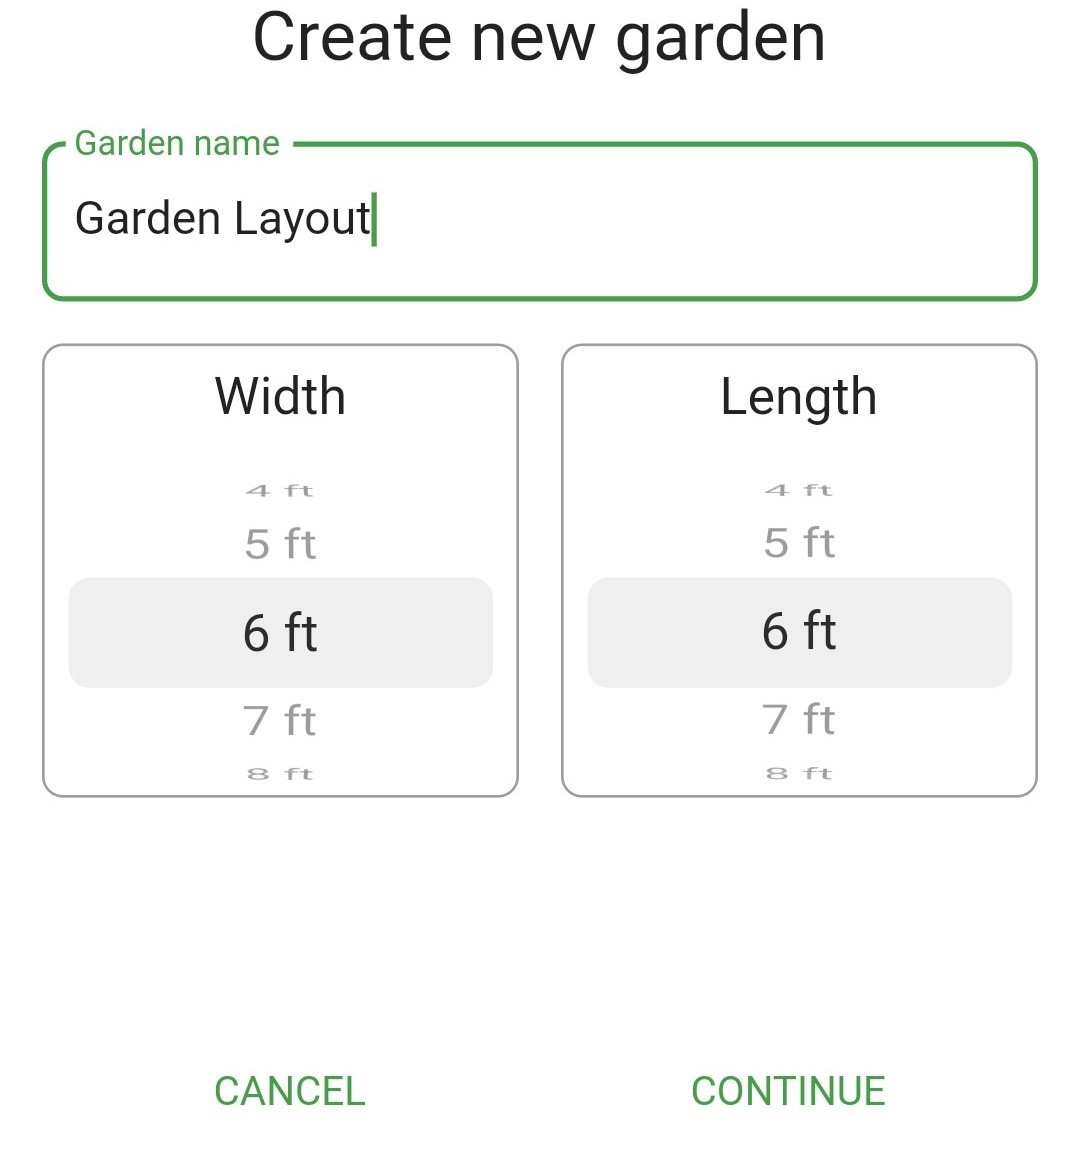 Screenshot of the Create new garden window in Planter